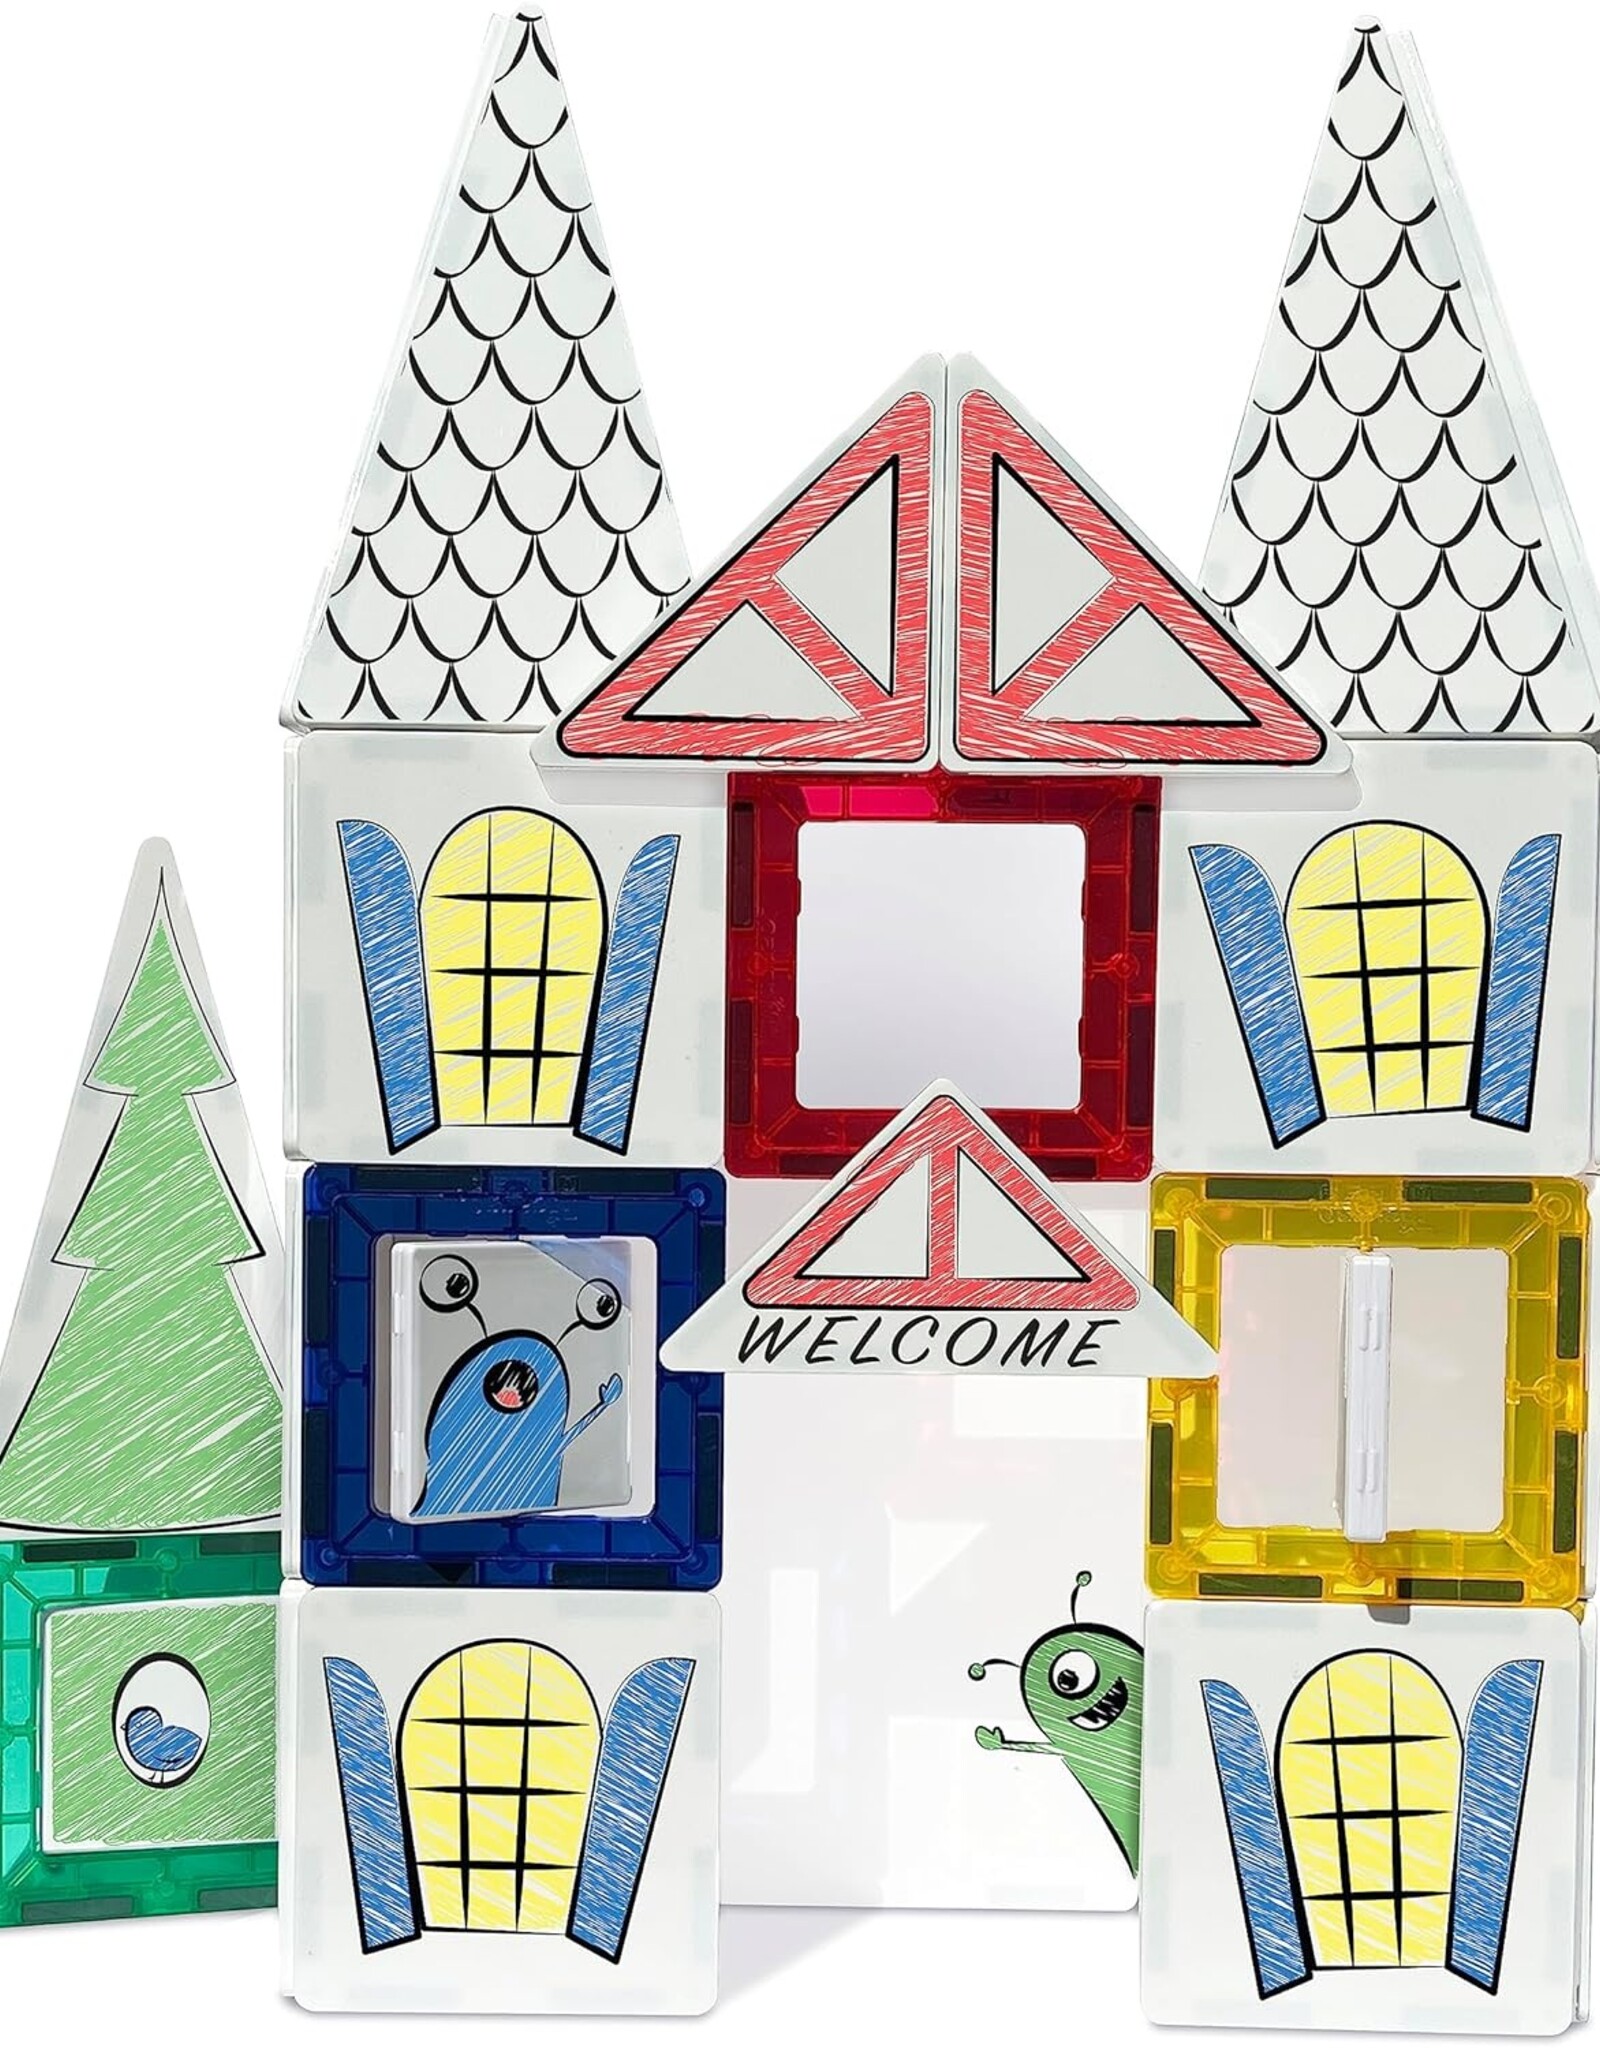 Crayola Doodle Tiles Magnetic Tiles 40-Piece Set